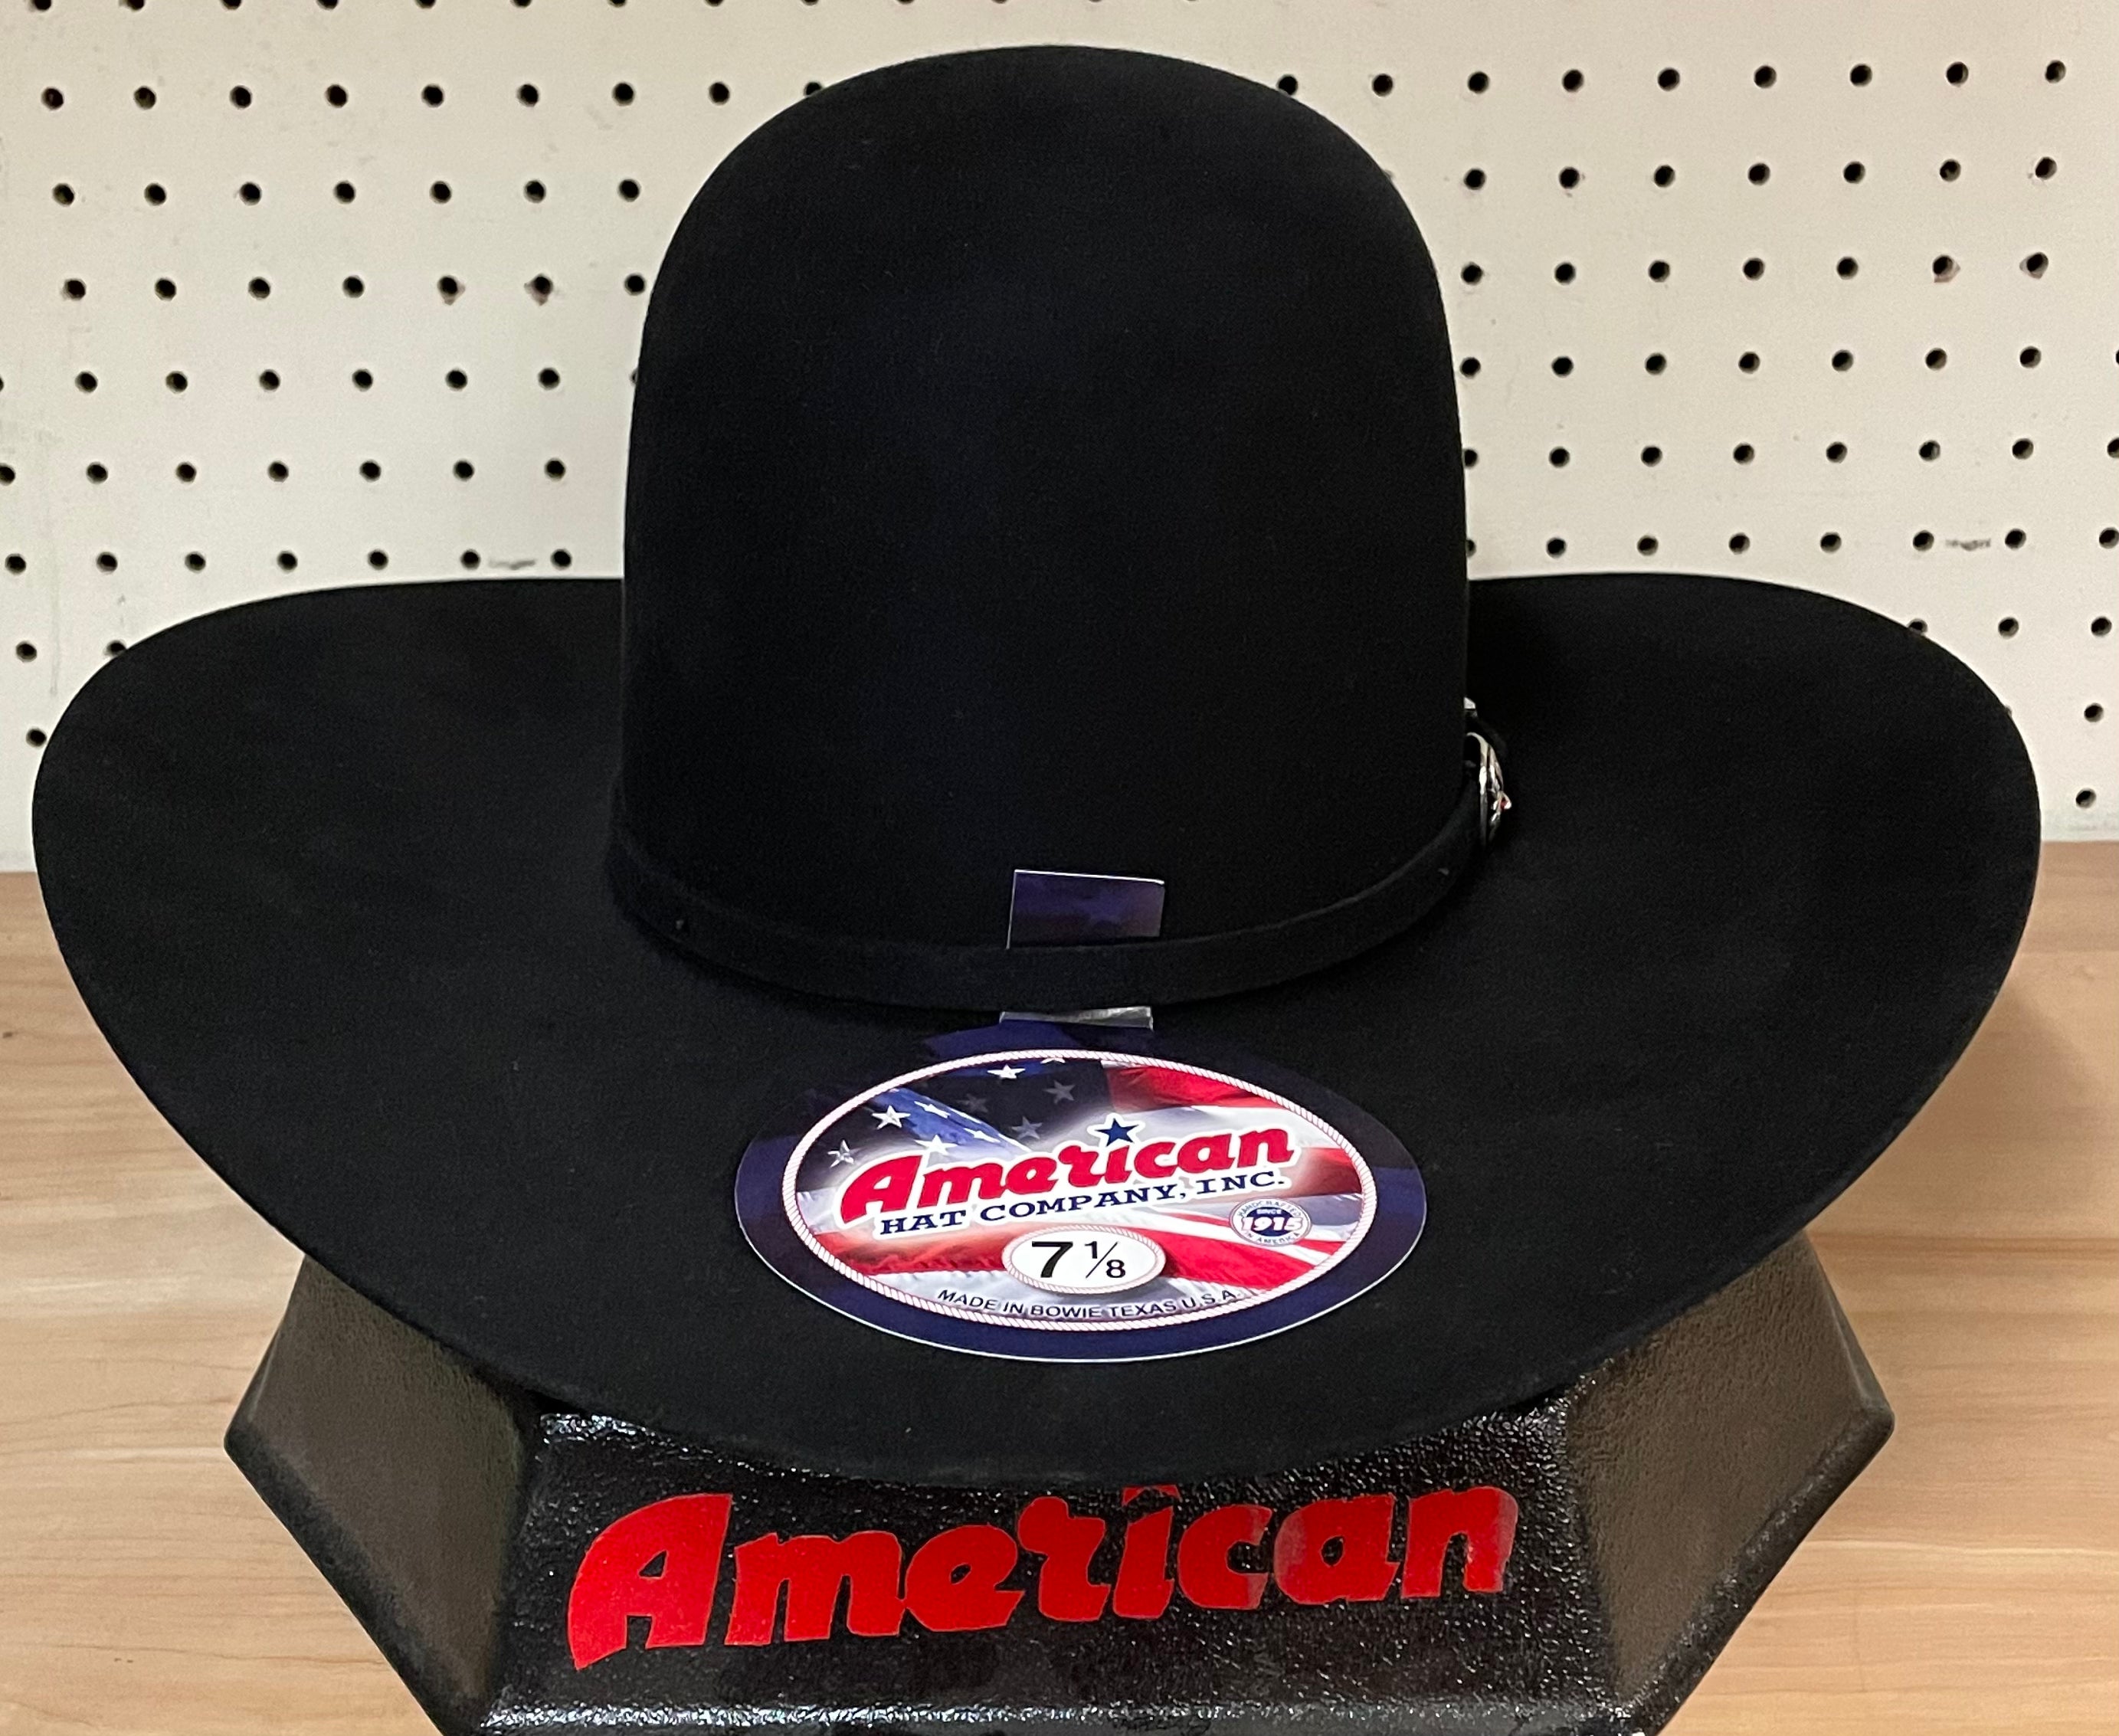 American Hat Company 20X Pecan Fur Felt Cowboy Hat - The Boot Store